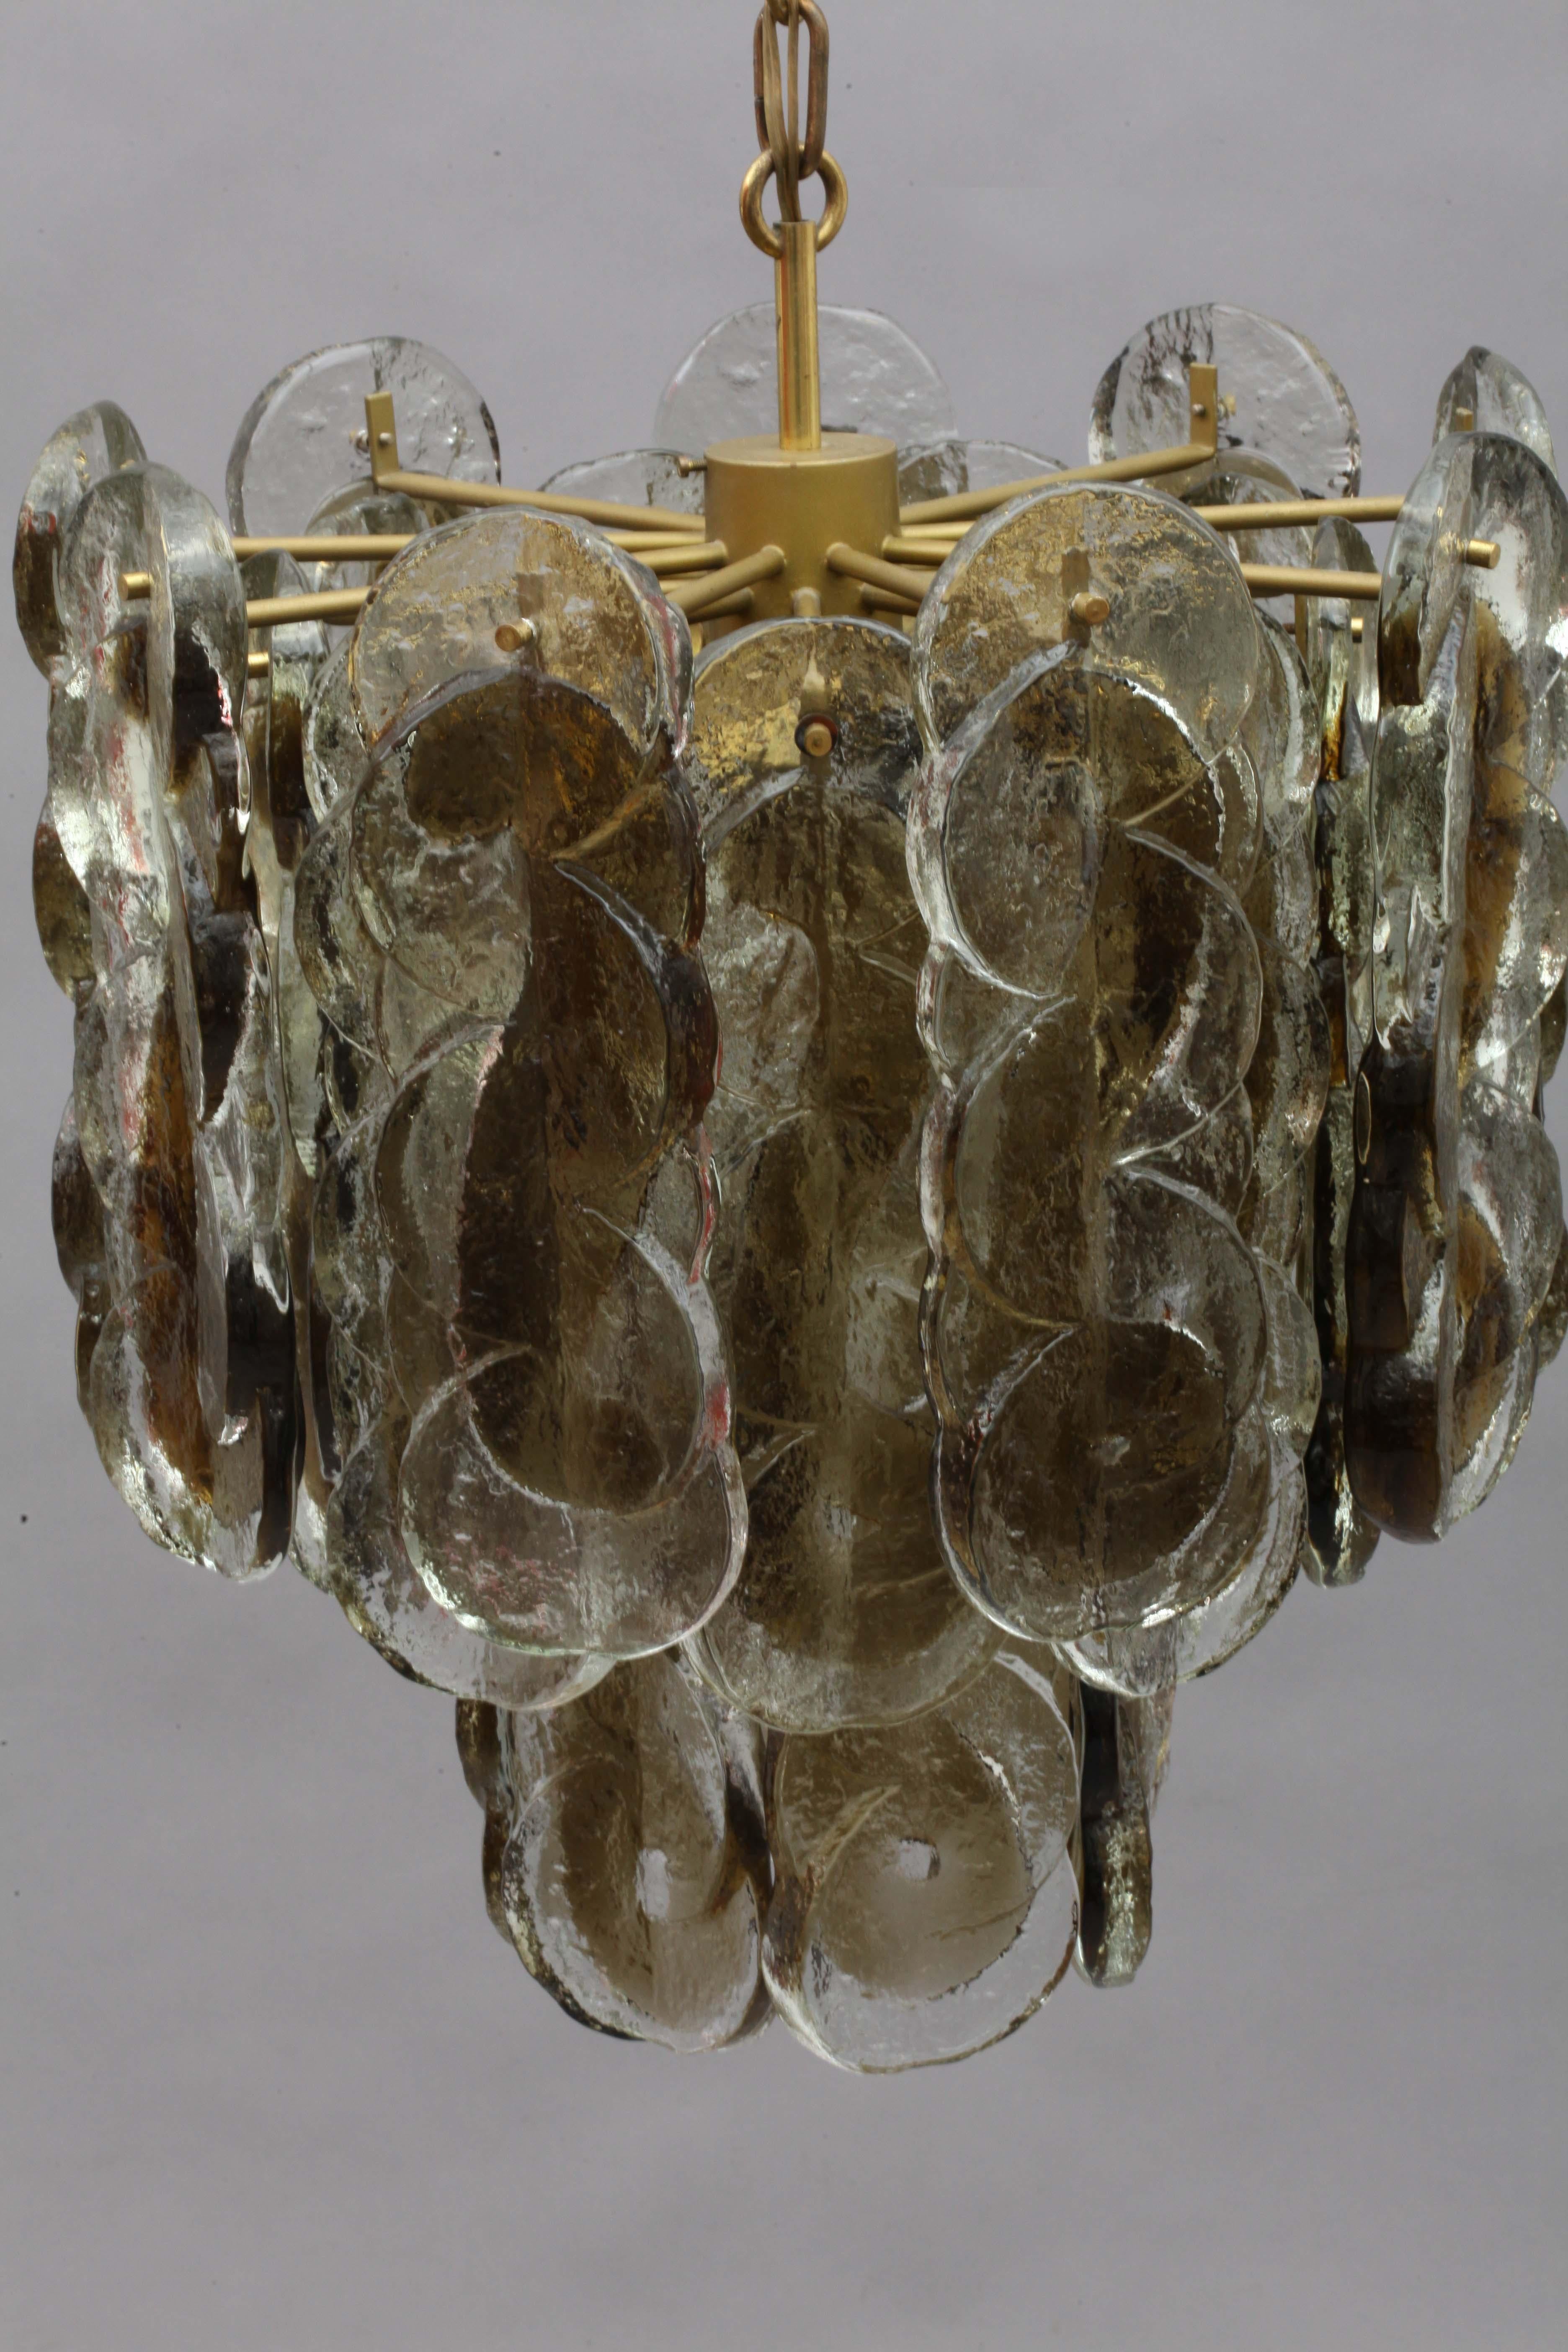 Huge frozen glass hanging lamp,
Model 